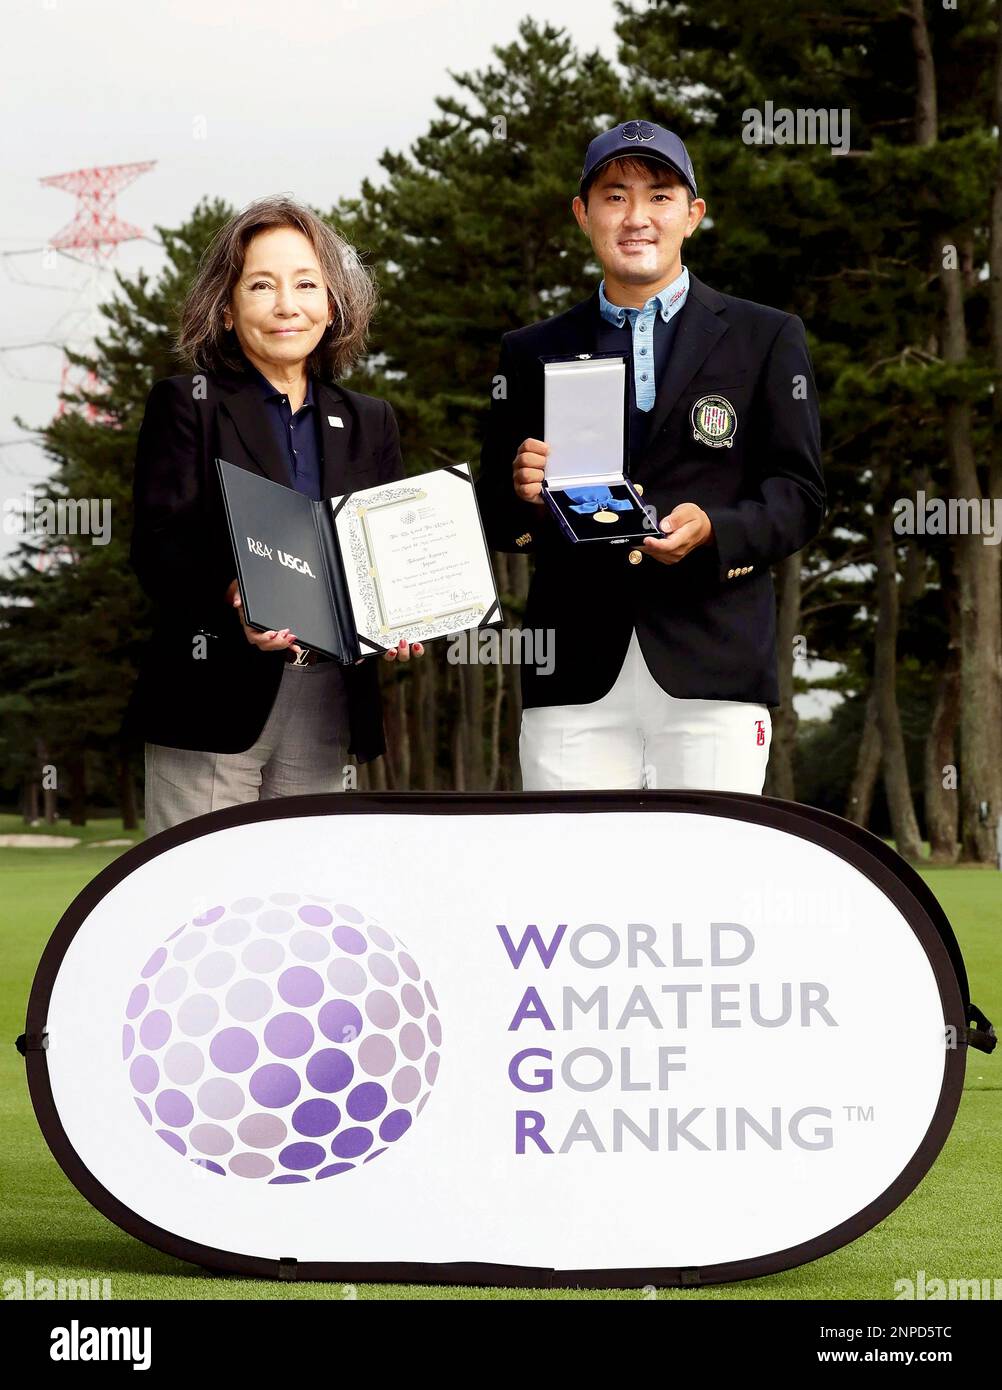 World Amateur Golf Ranking